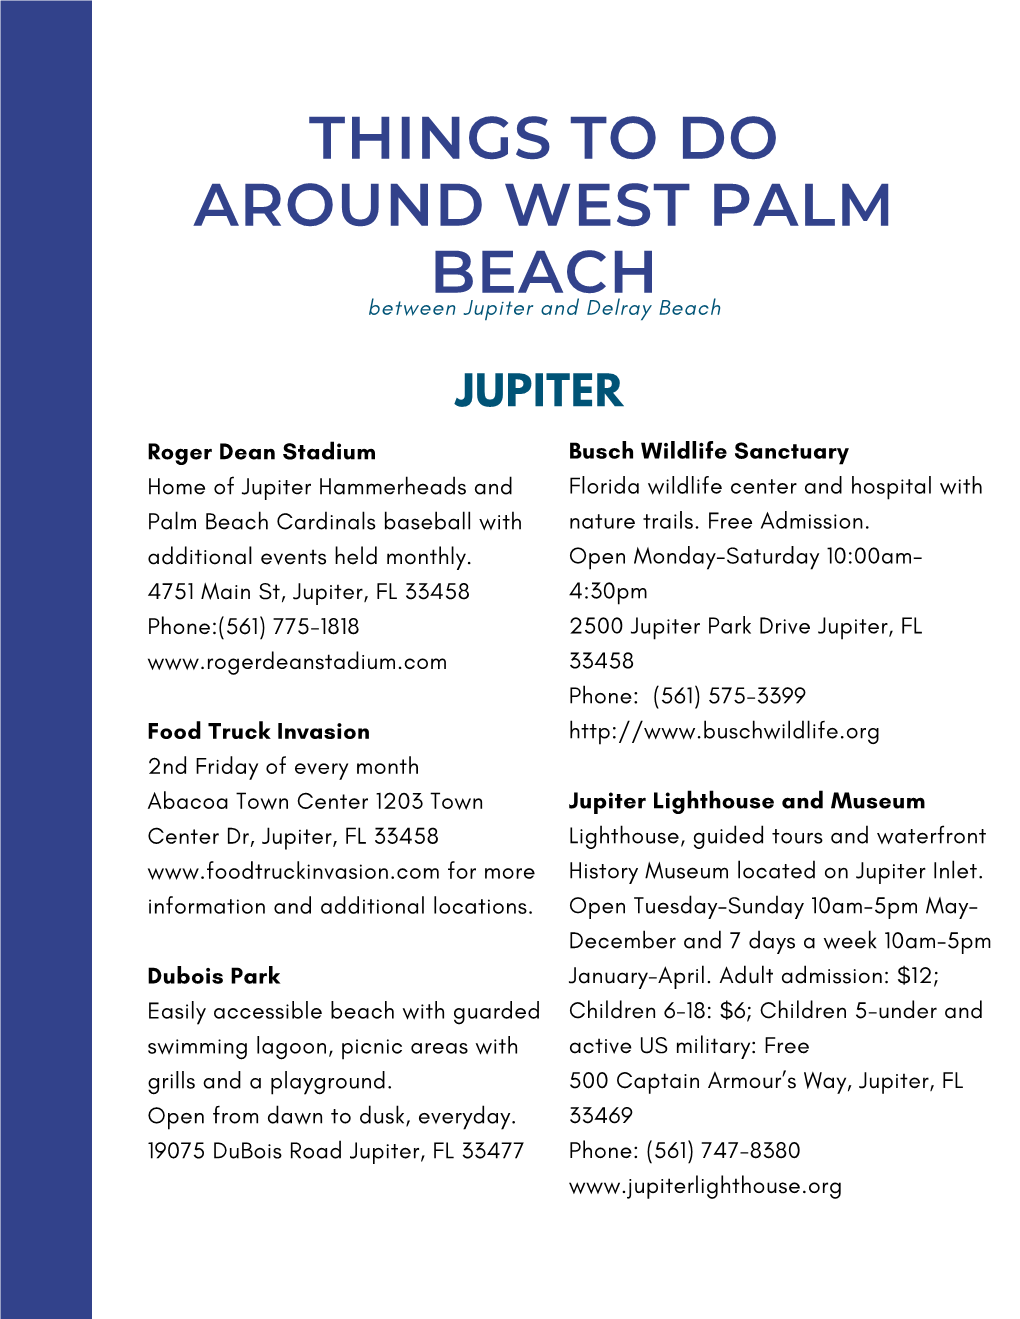 Things to Do Around West Palm Beach